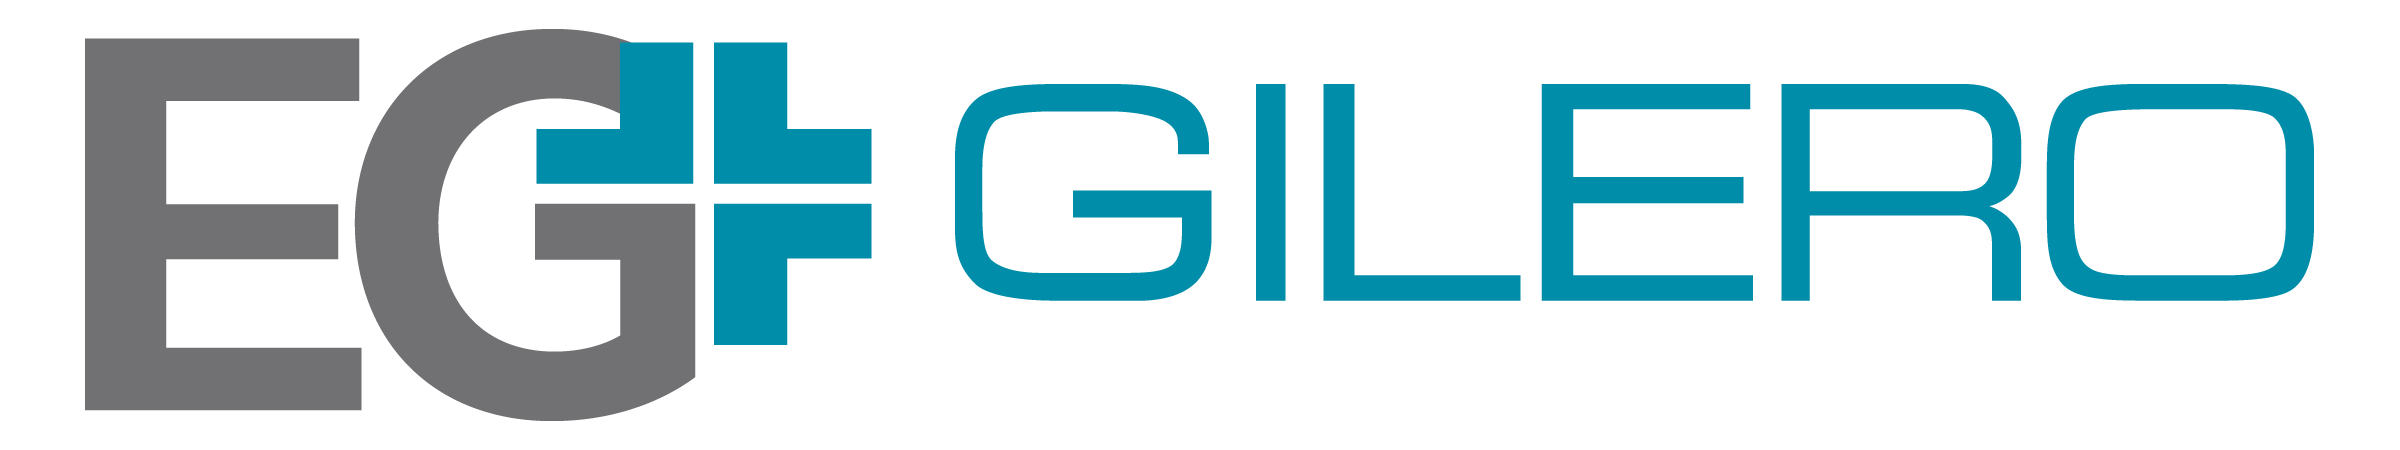 EG-GILERO logo